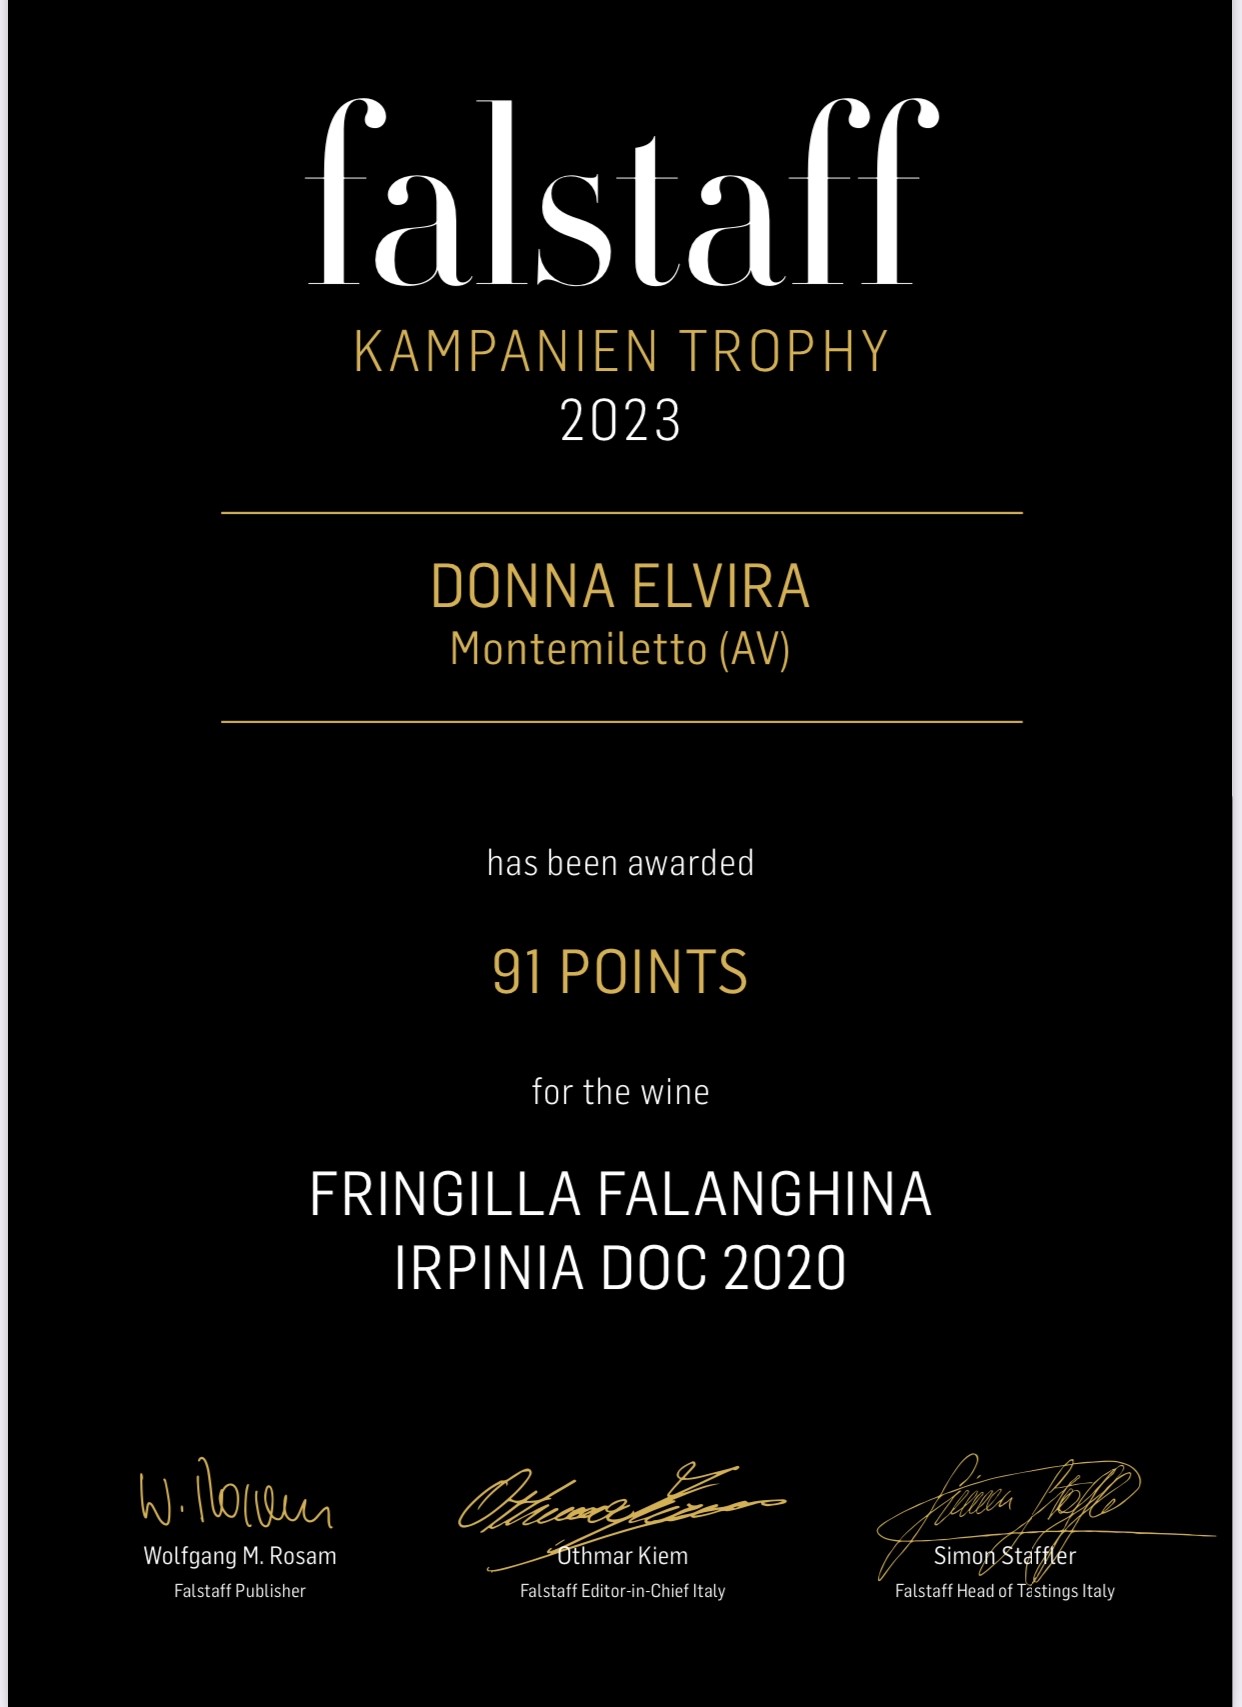 Premiazione Falstaff Trophy Kampanien 2023